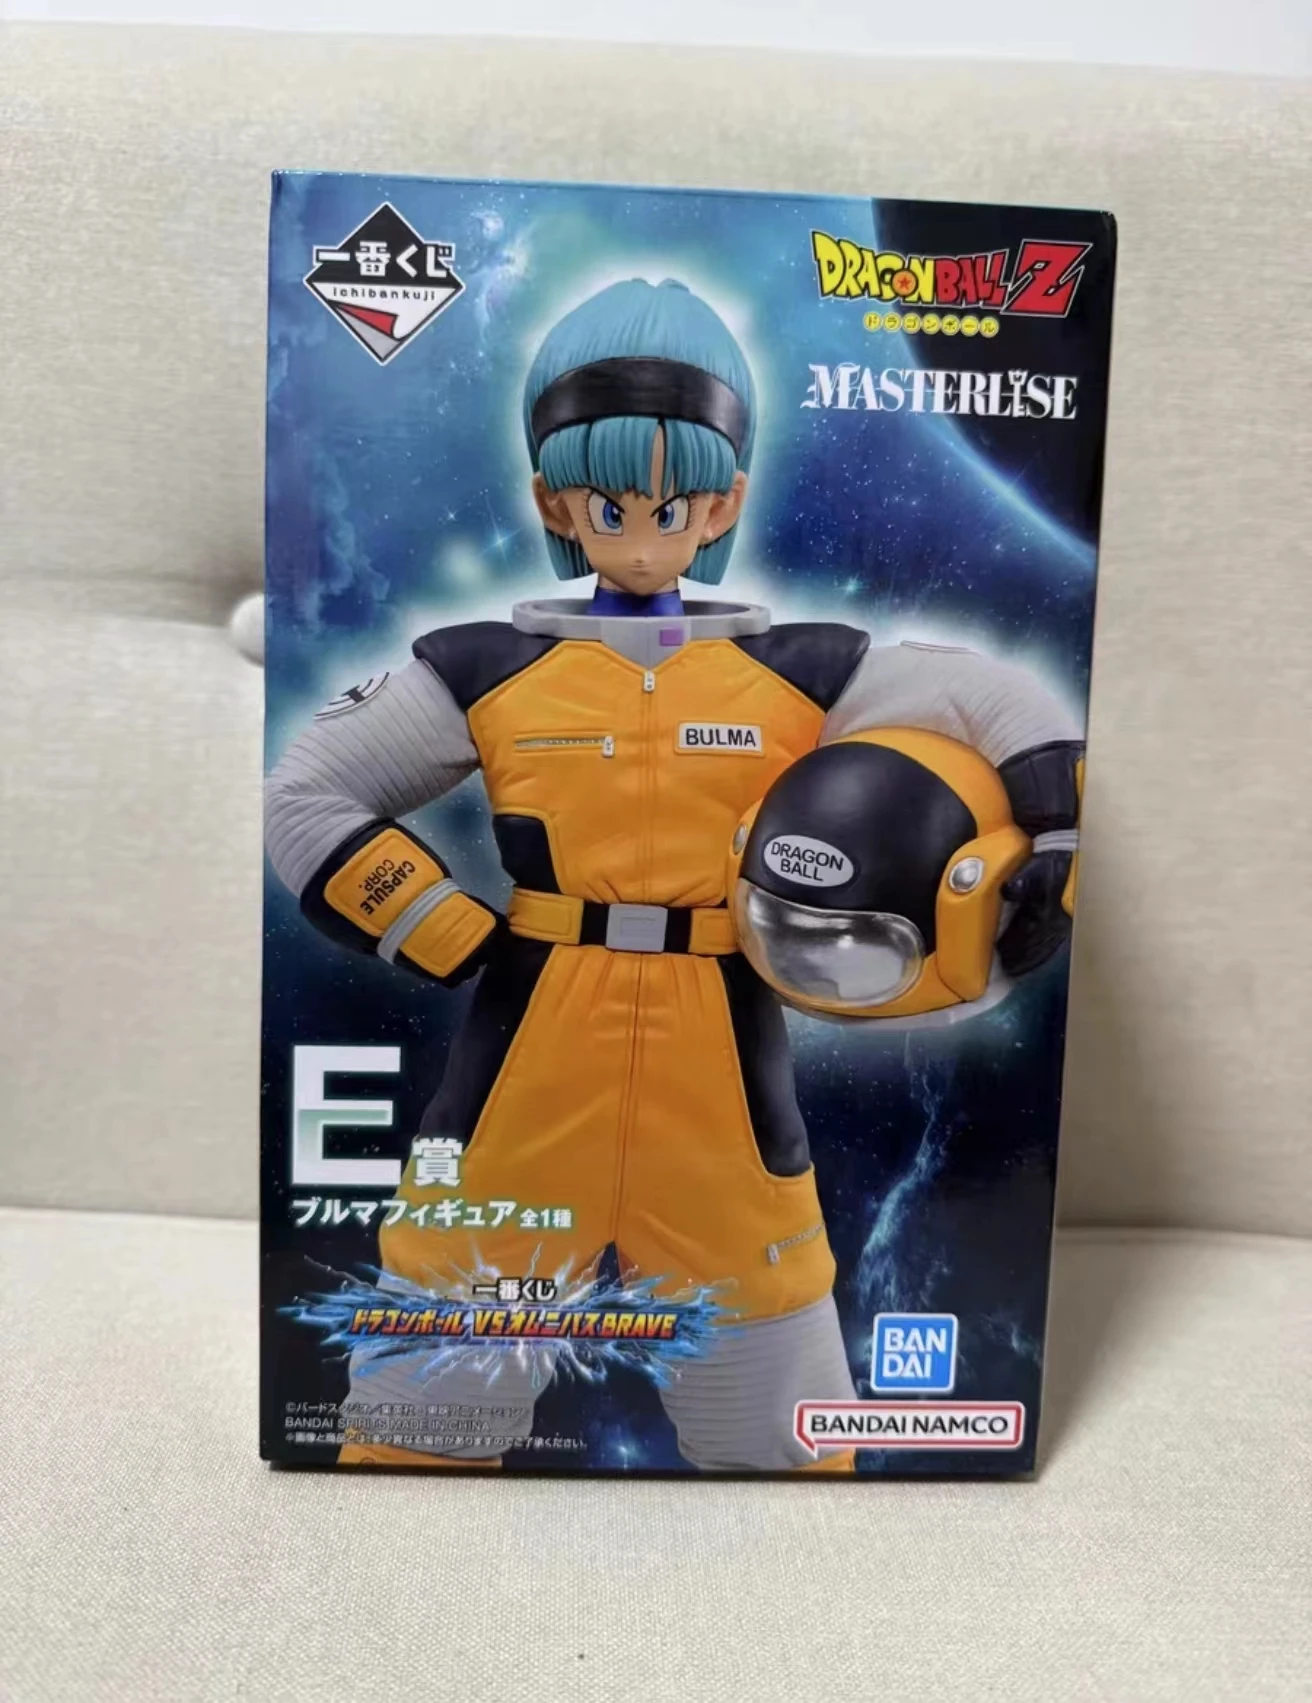 

19.5cm Anime Dragon Ball Z Bulma Namek Action Figure Space Suit Bulma Figures Collection Figurine Model Statue Doll Gift Toys